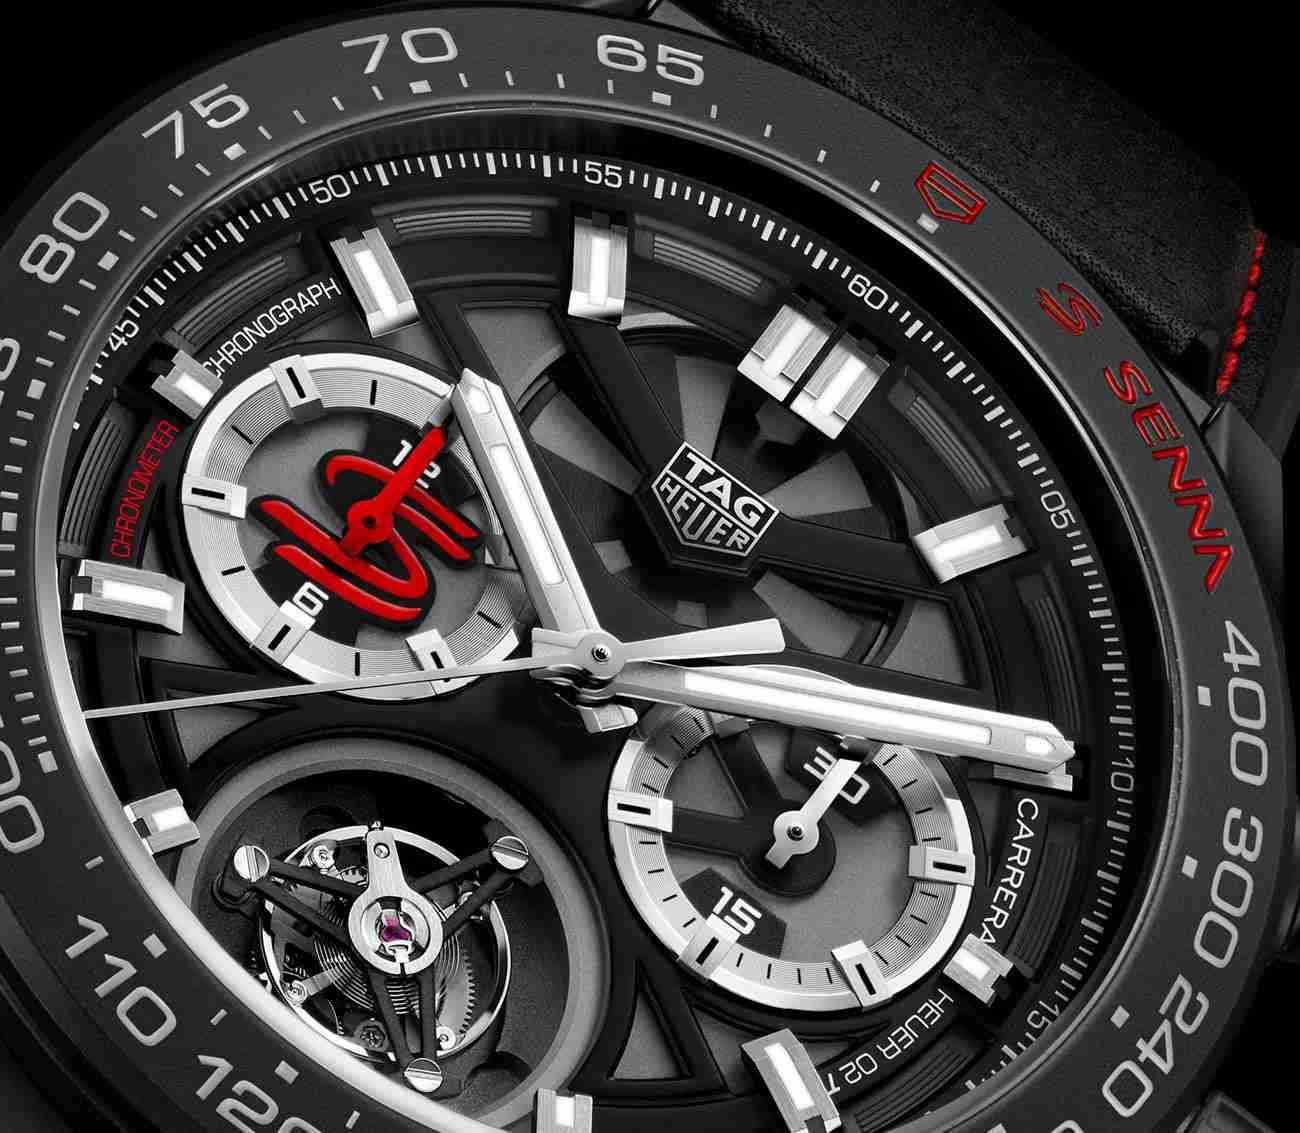 2018 Black Friday Recommend Swiss TAG Heuer Carrera Heuer 02 Tourbillon Chronograph Chronometer Replica Watches Description